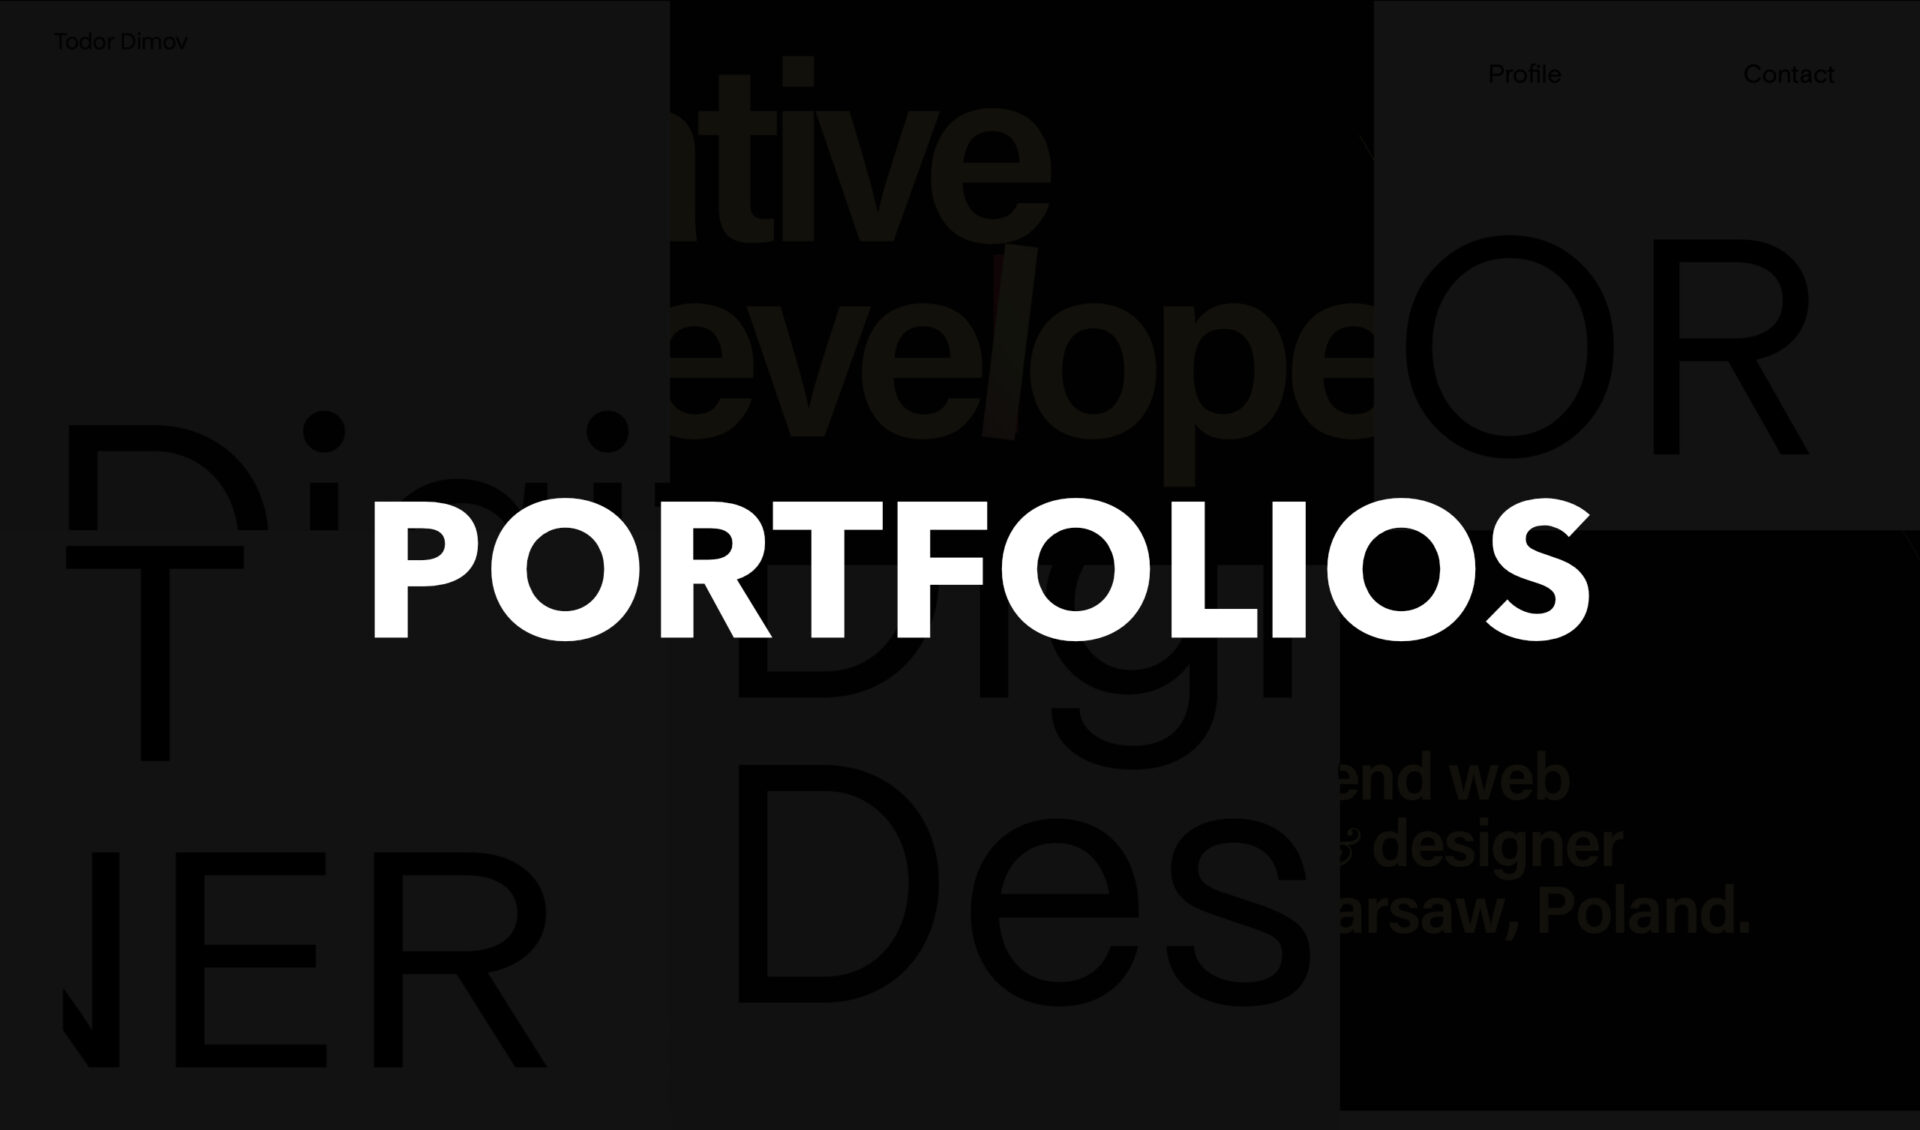 portfolios